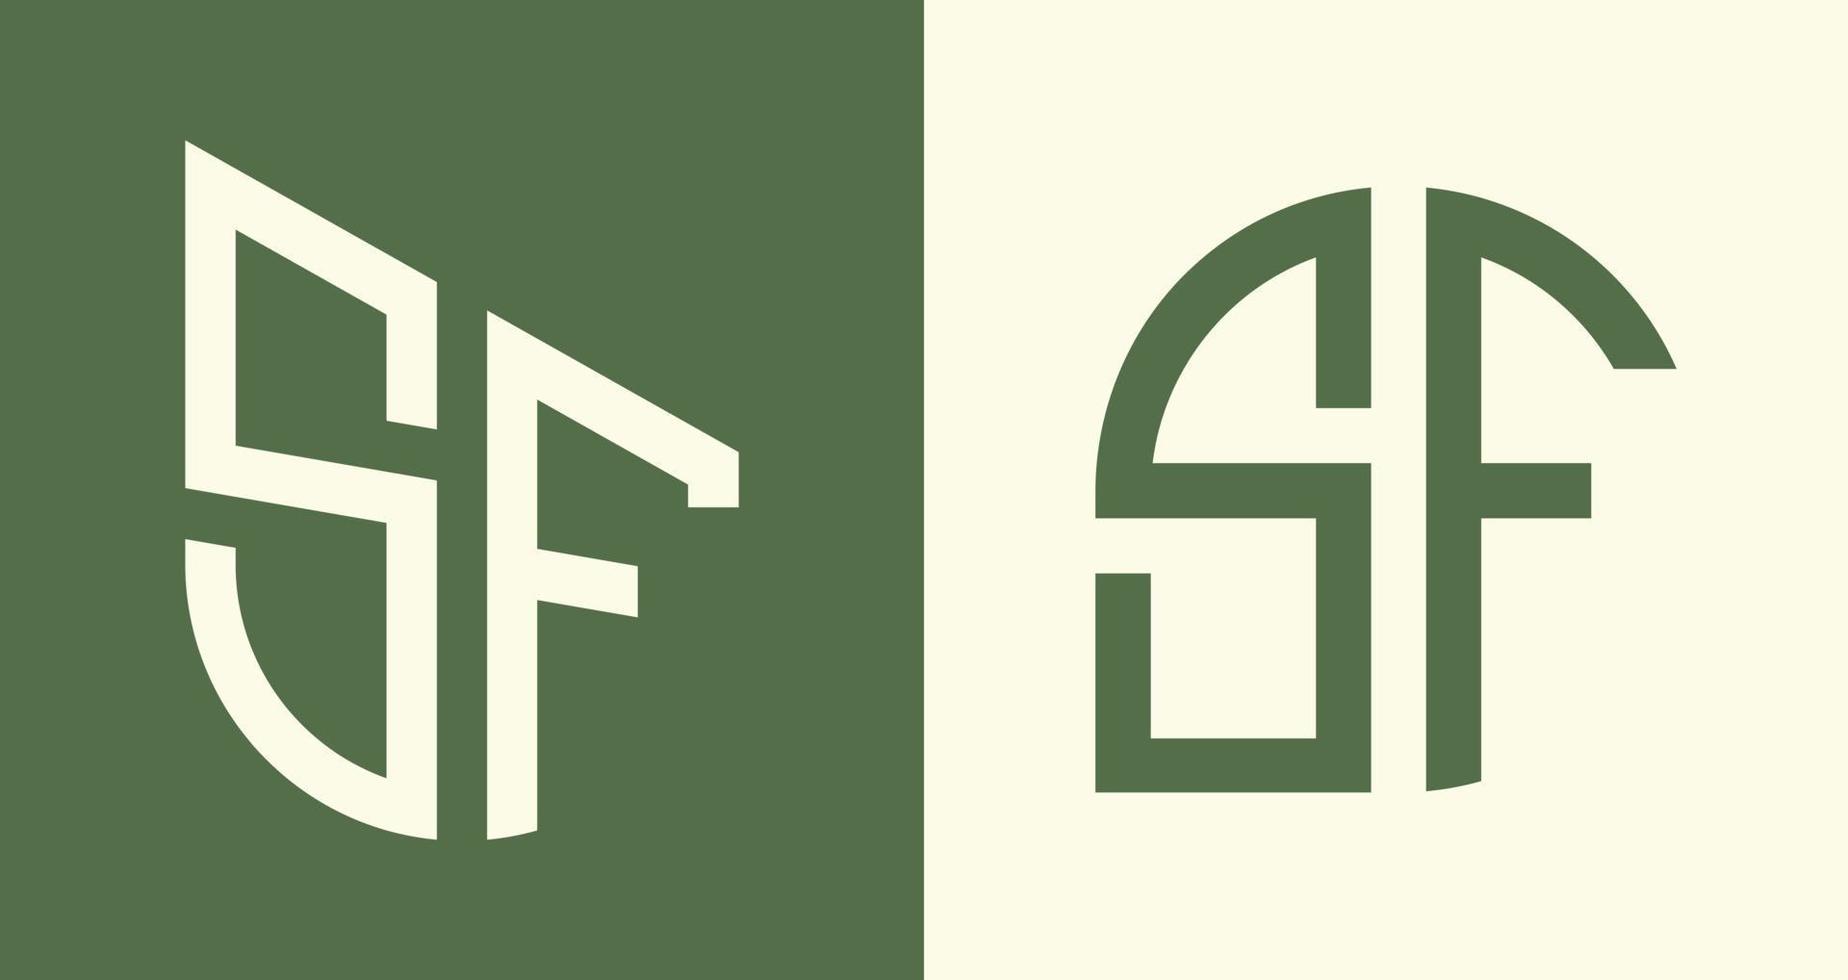 kreative einfache anfangsbuchstaben sf logo designs paket. vektor